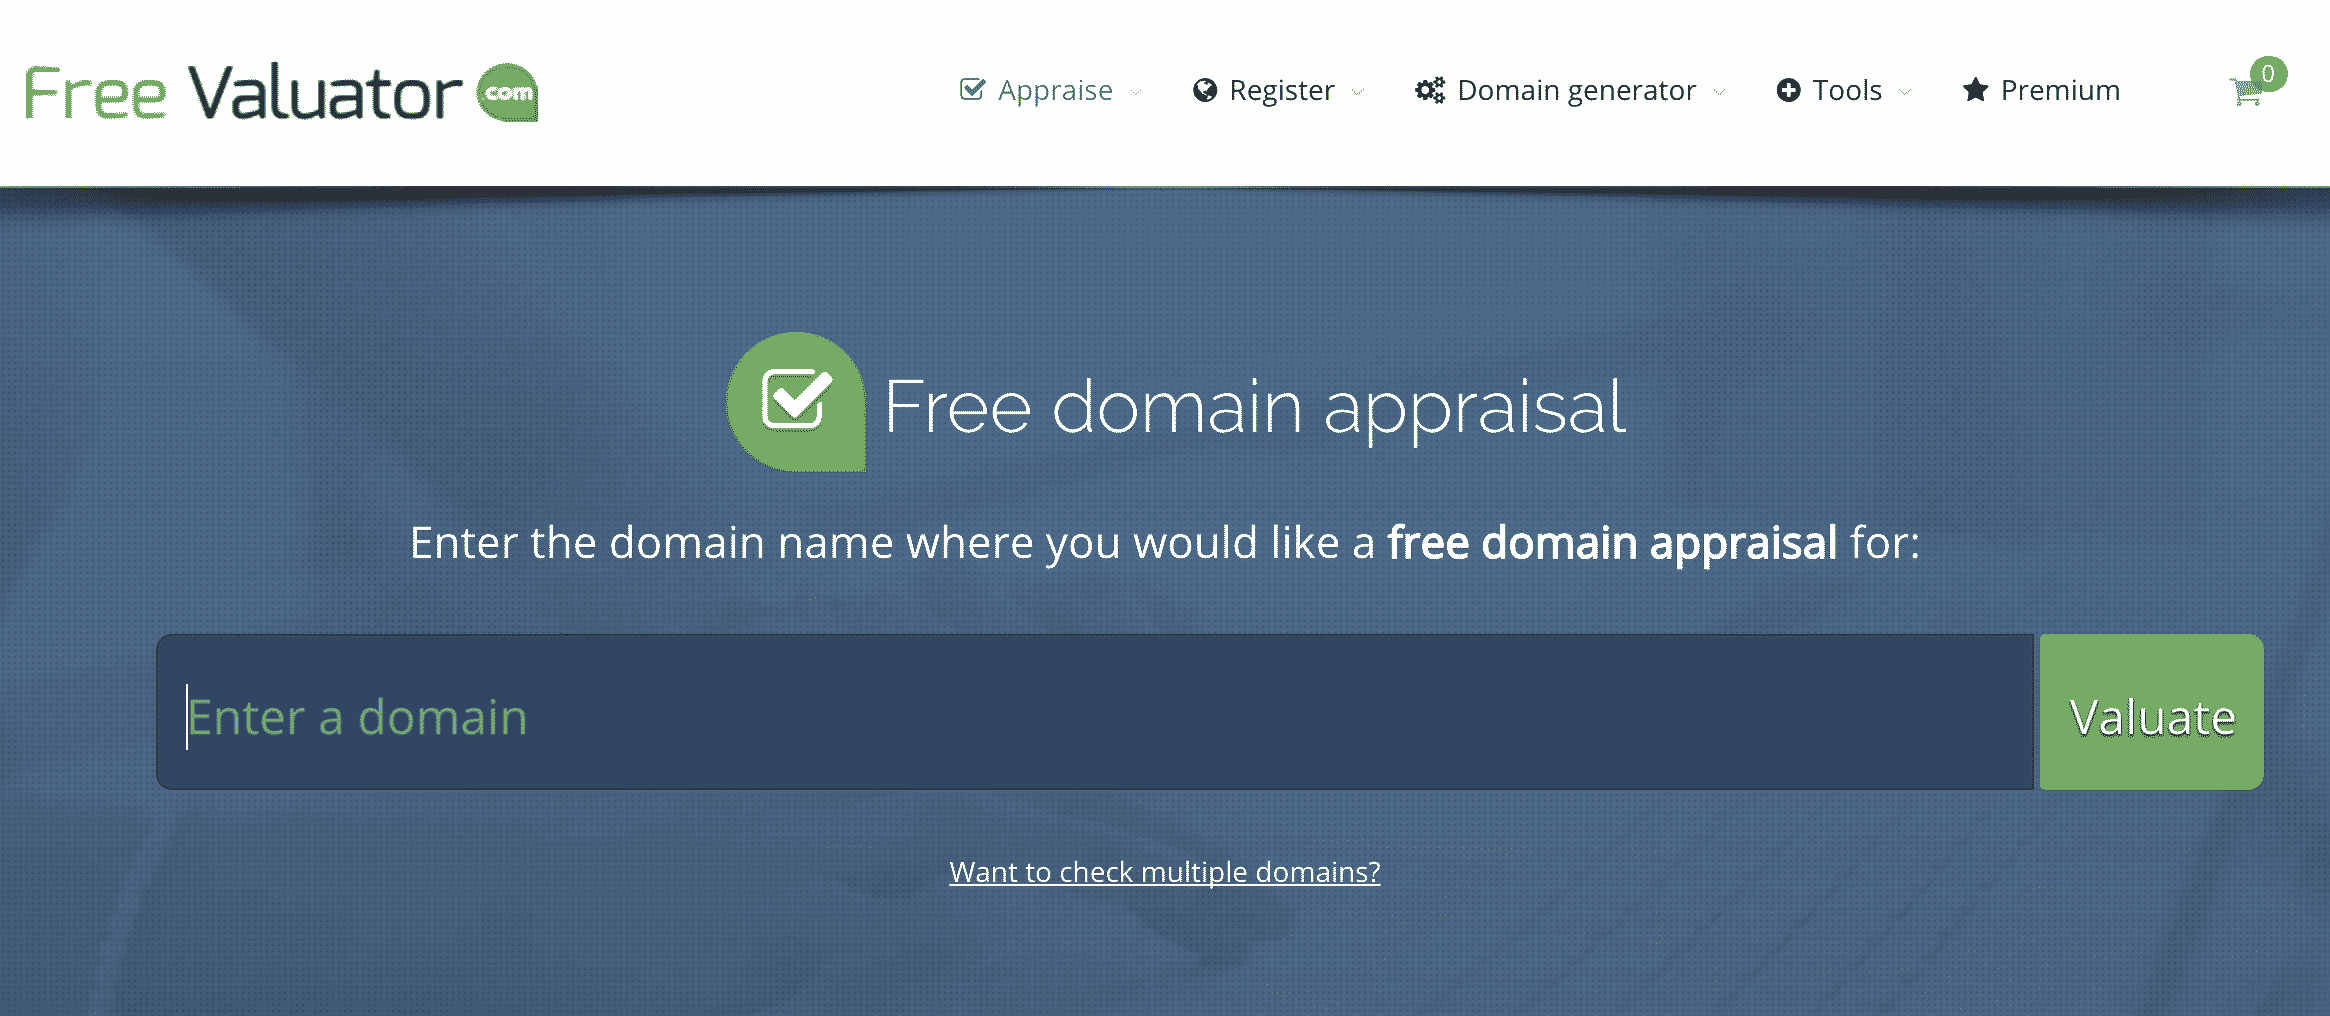 Free Valuator - Domain Name Valuation Tool